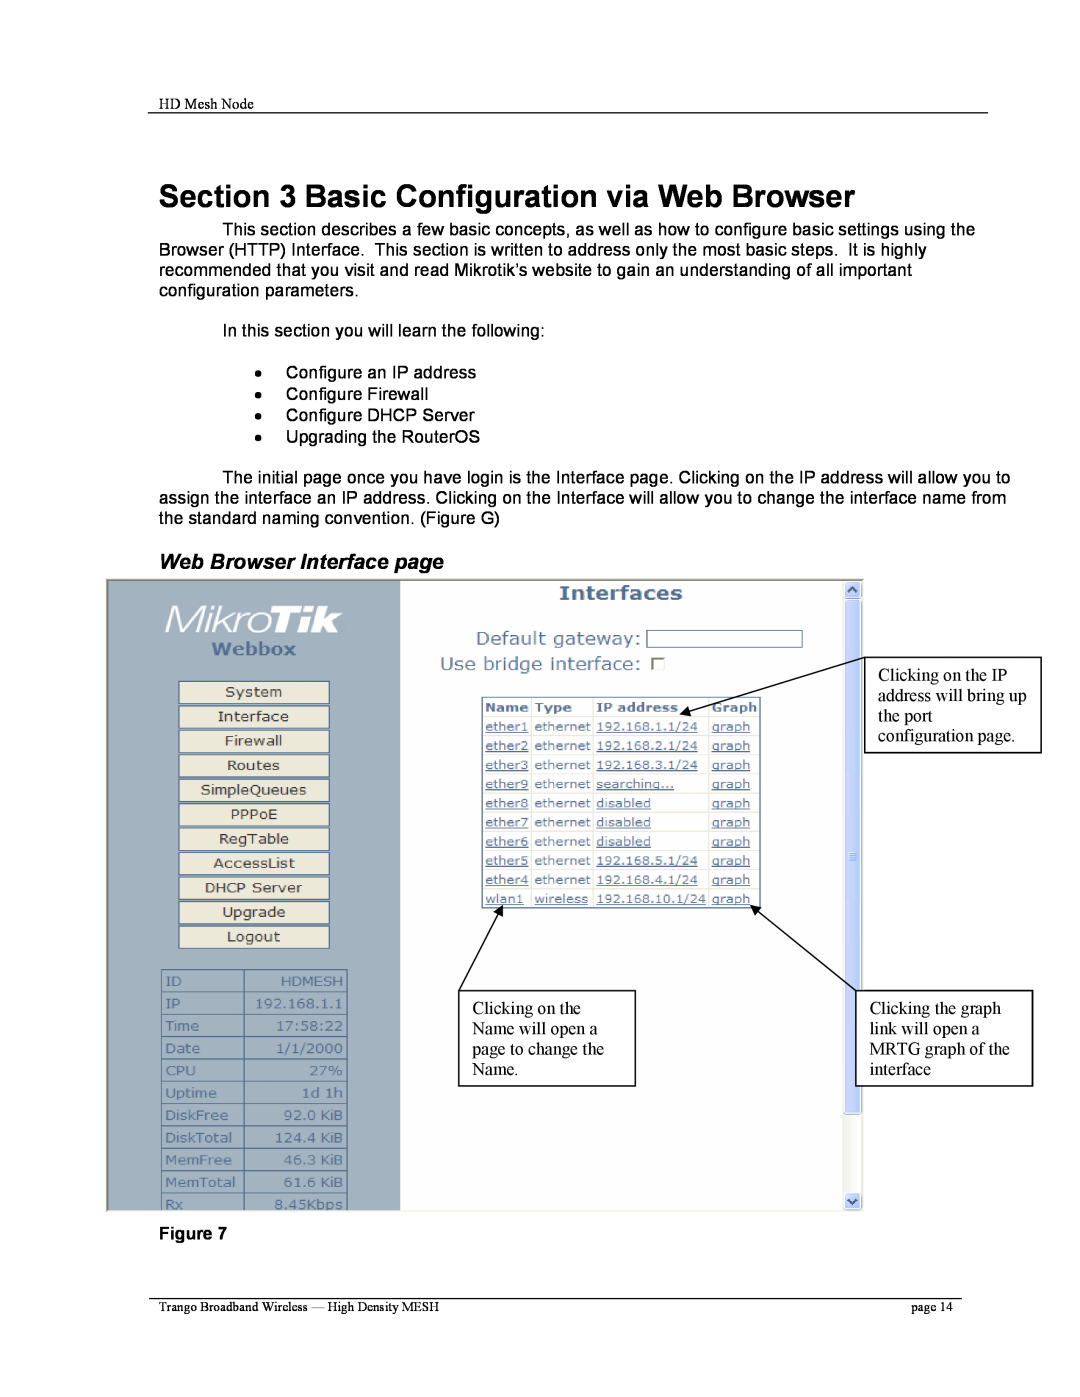 Trango Broadband High Density Mesh System user manual Basic Configuration via Web Browser, Web Browser Interface page 